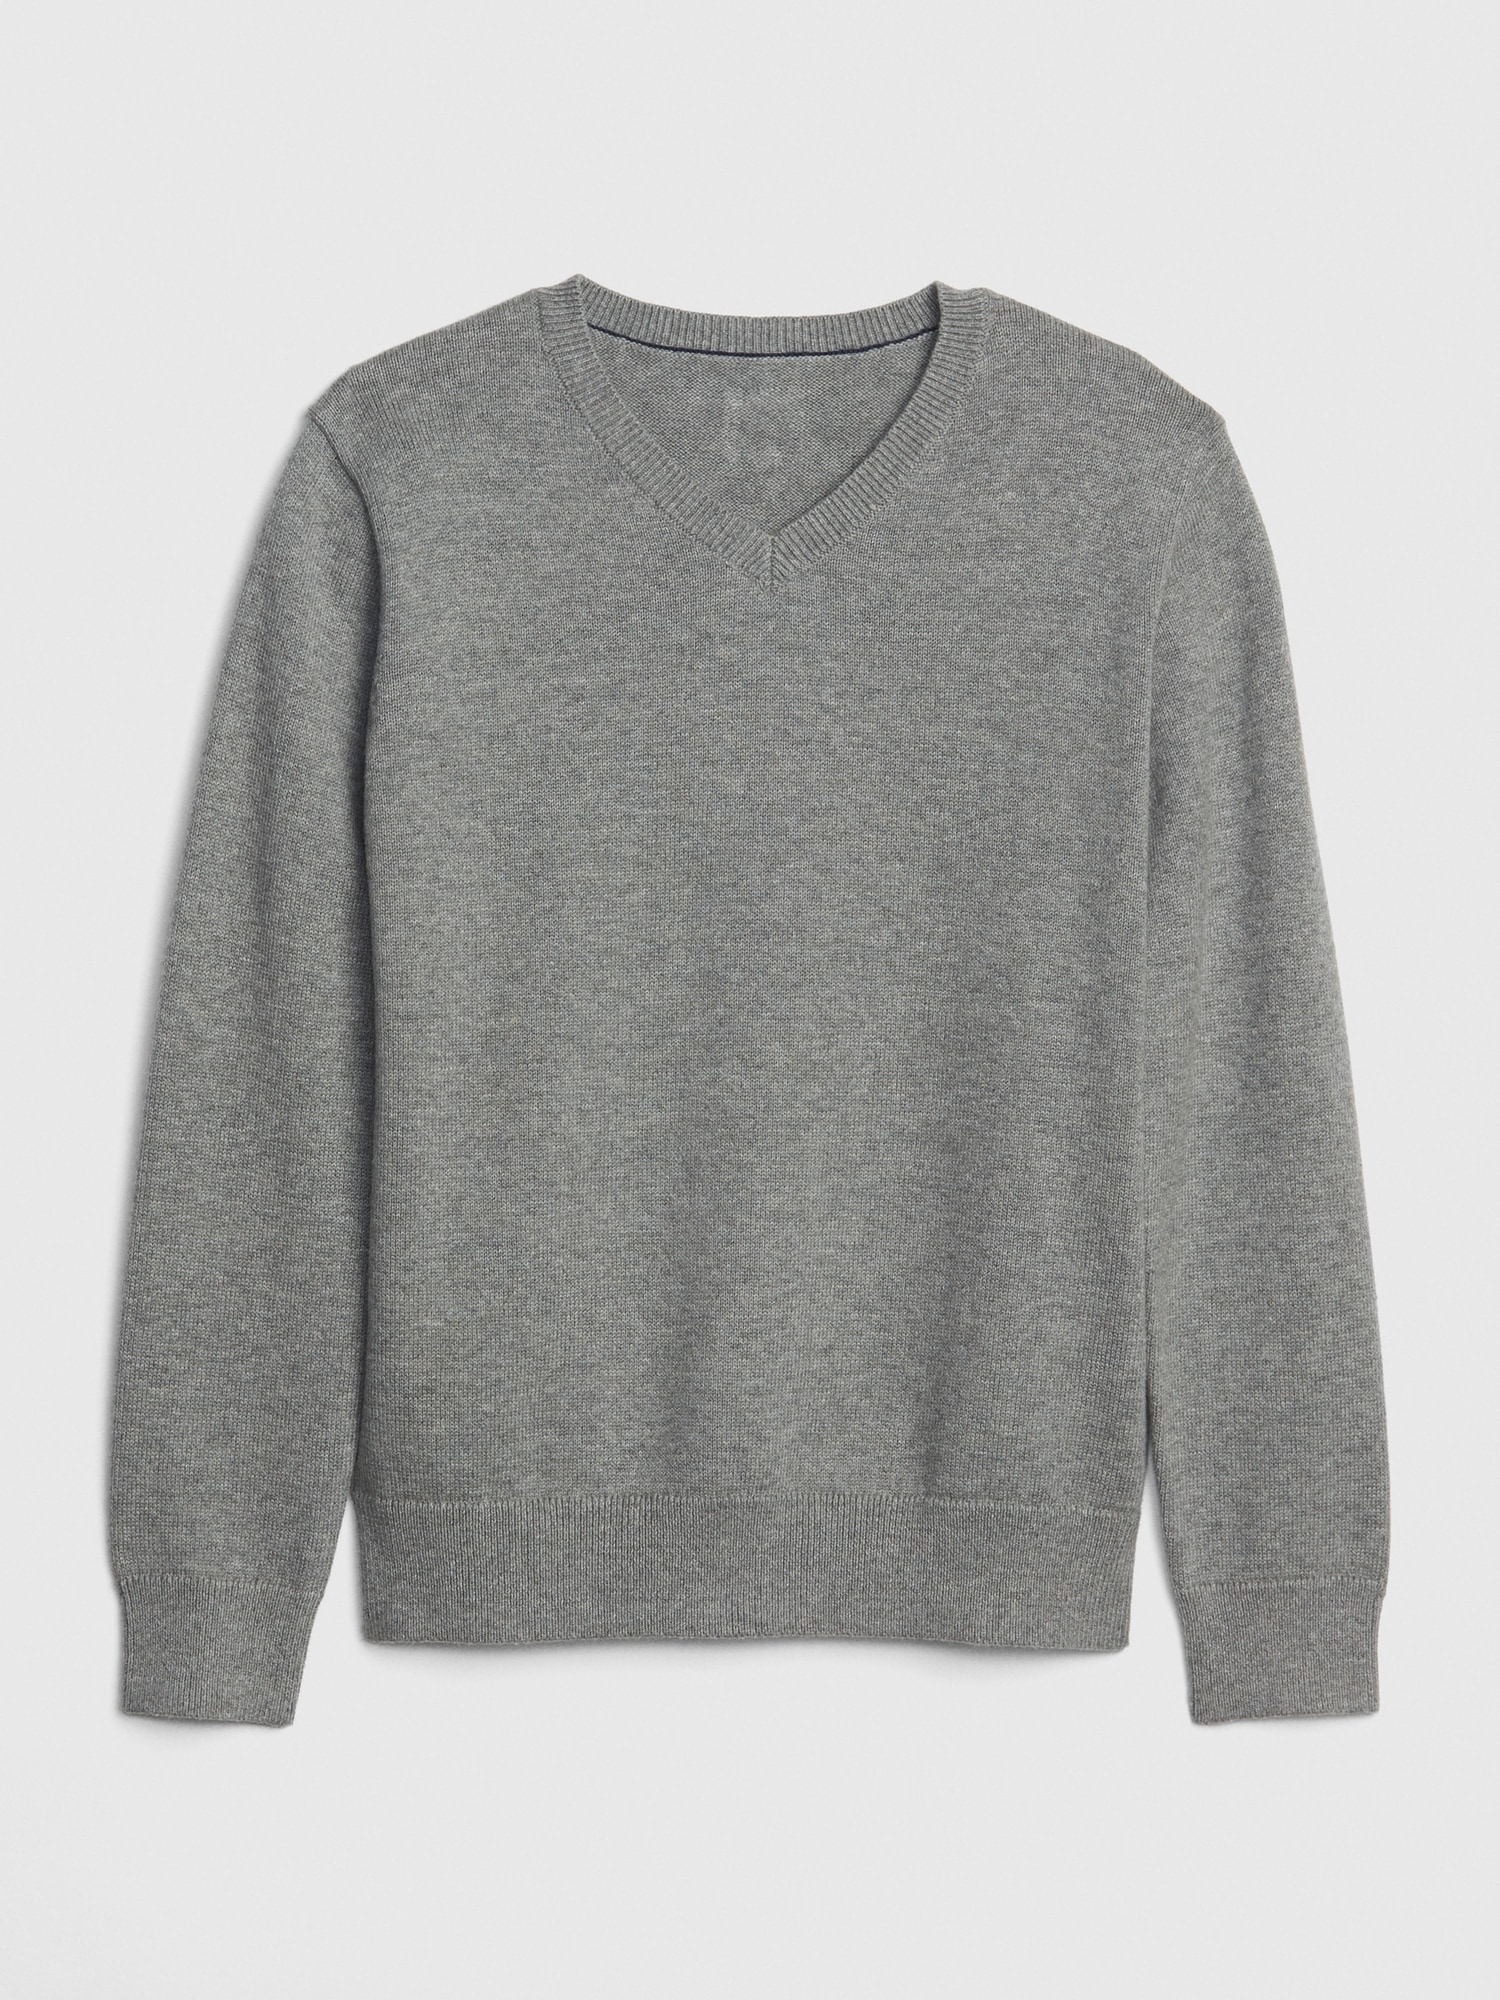 On Sale Gap Men's Merino Extra Fine V-neck Sweater Jumper Top Black RRP £39.95 